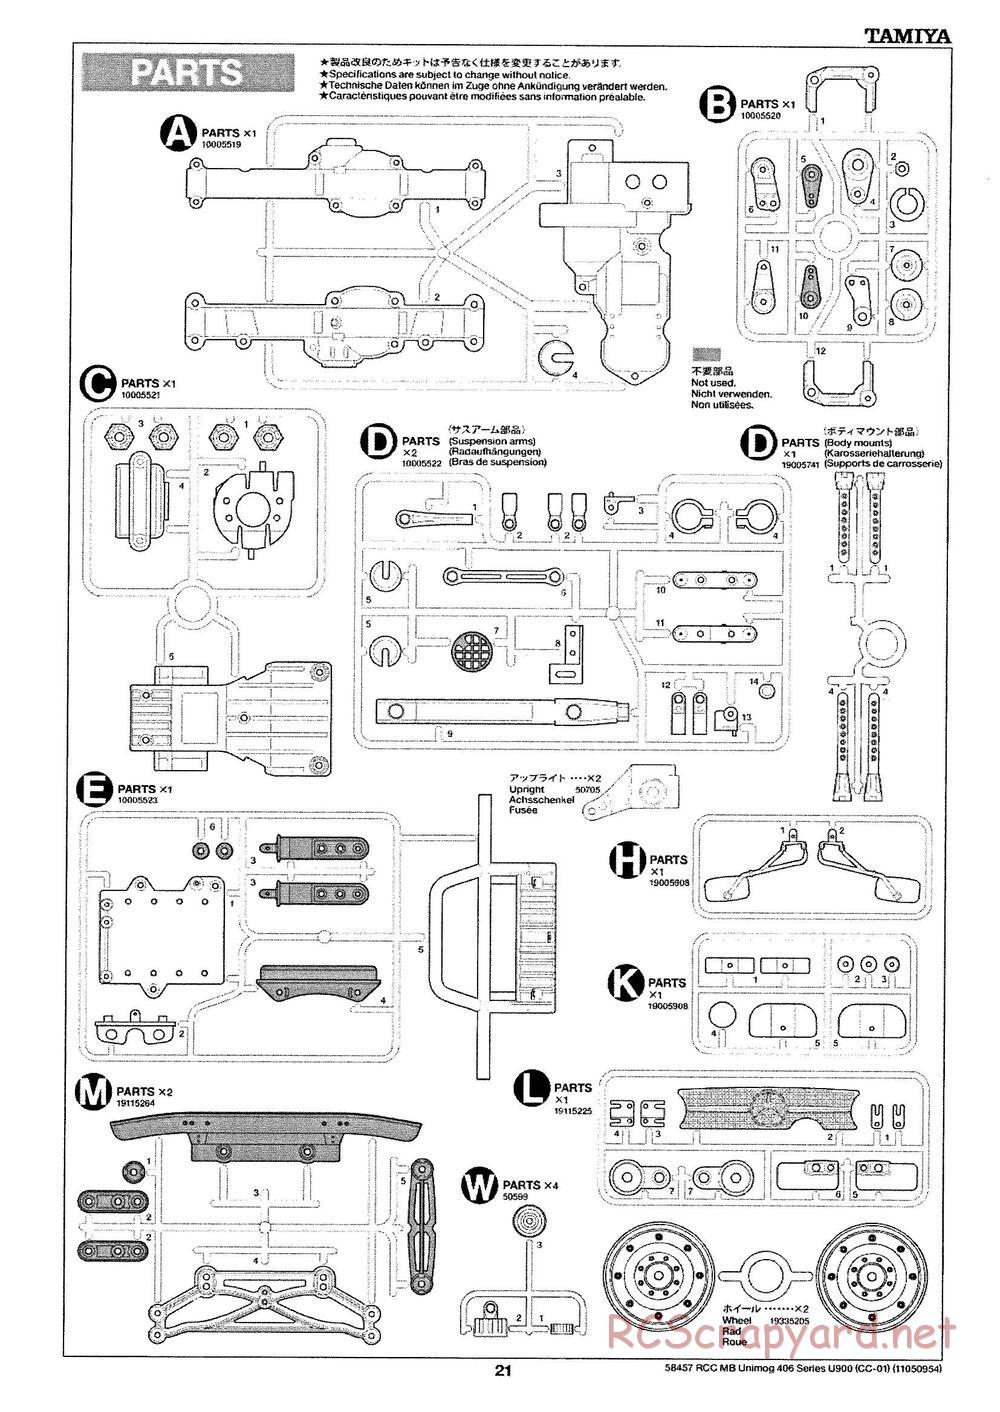 Tamiya - Mercedes-Benz Unimog 406 Series U900 - CC-01 Chassis - Manual - Page 21